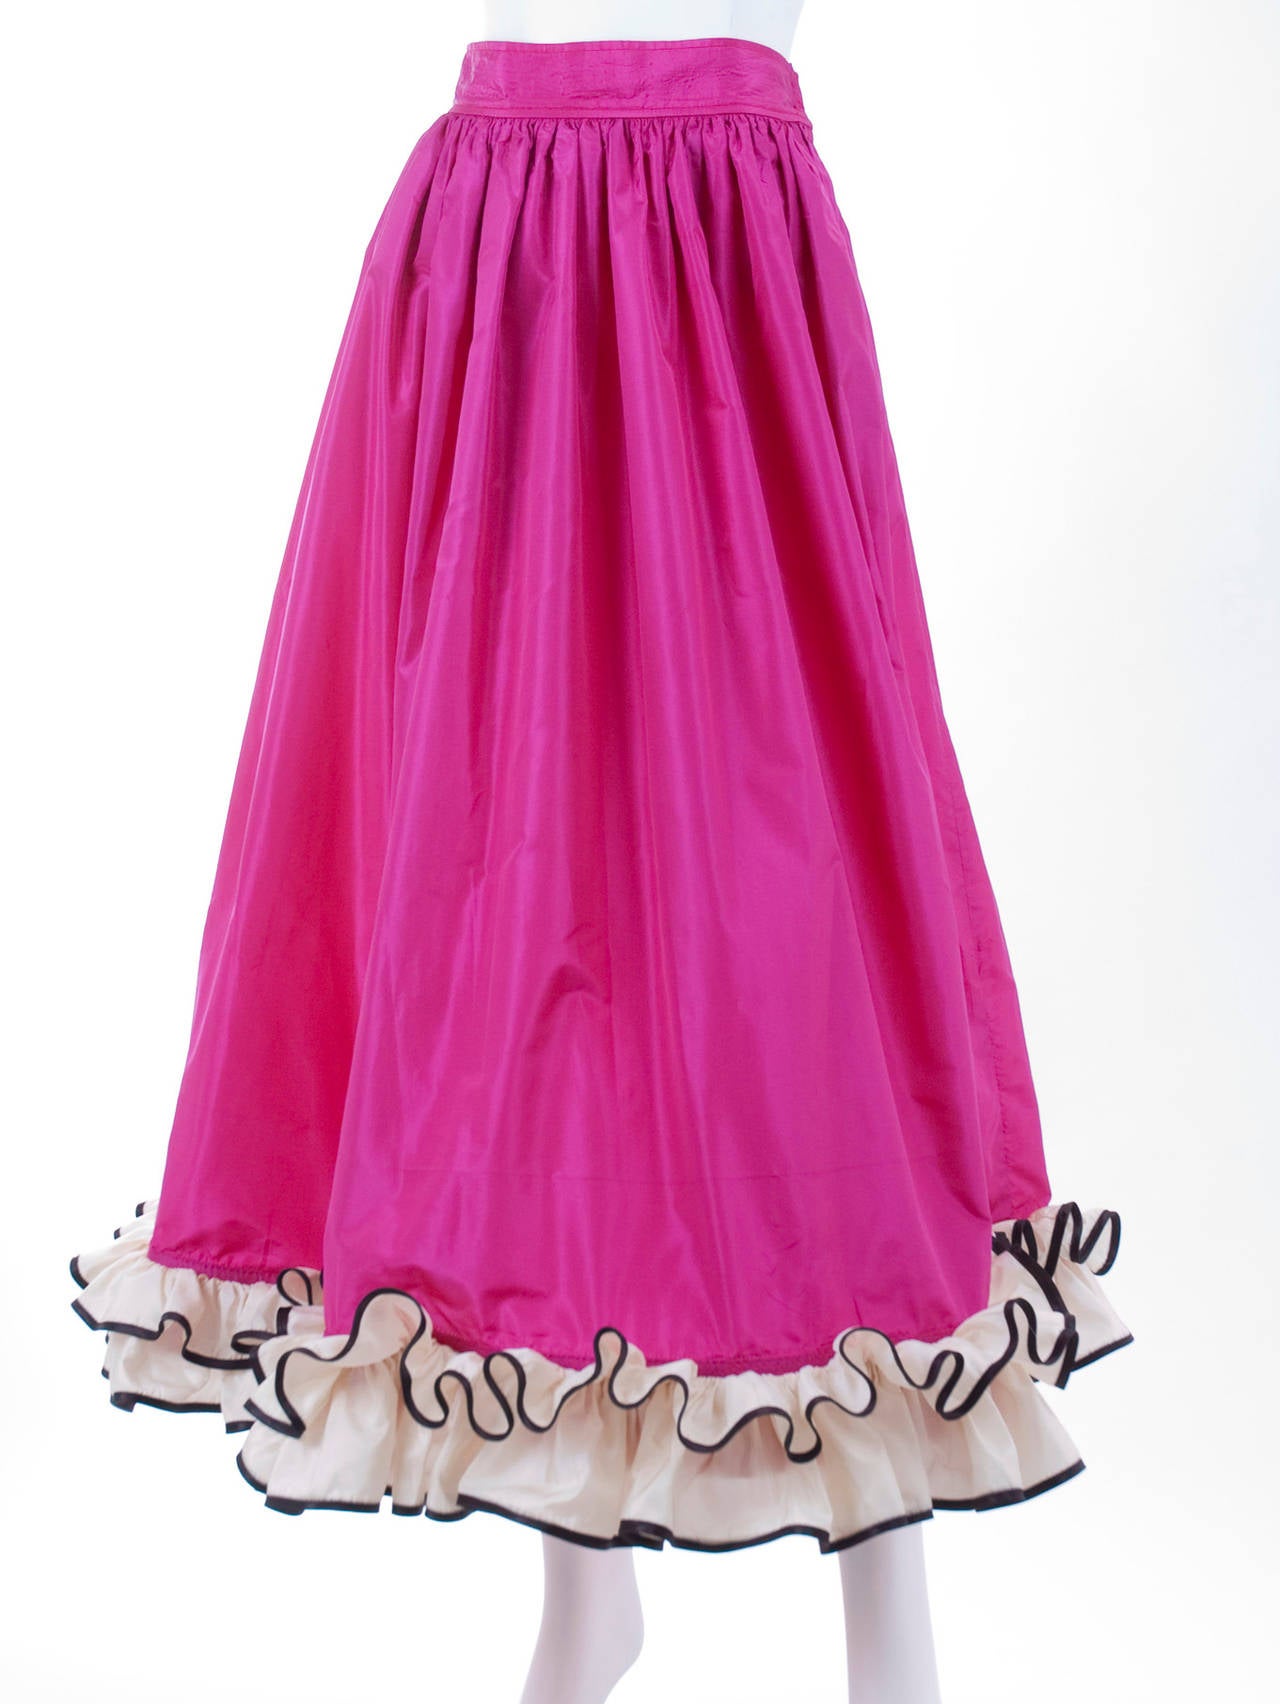 Vintage Yves Saint Laurent Evening Skirt.
Horsehair banding at the bottom.
Size EU 38

Measurements:
Length 37.5